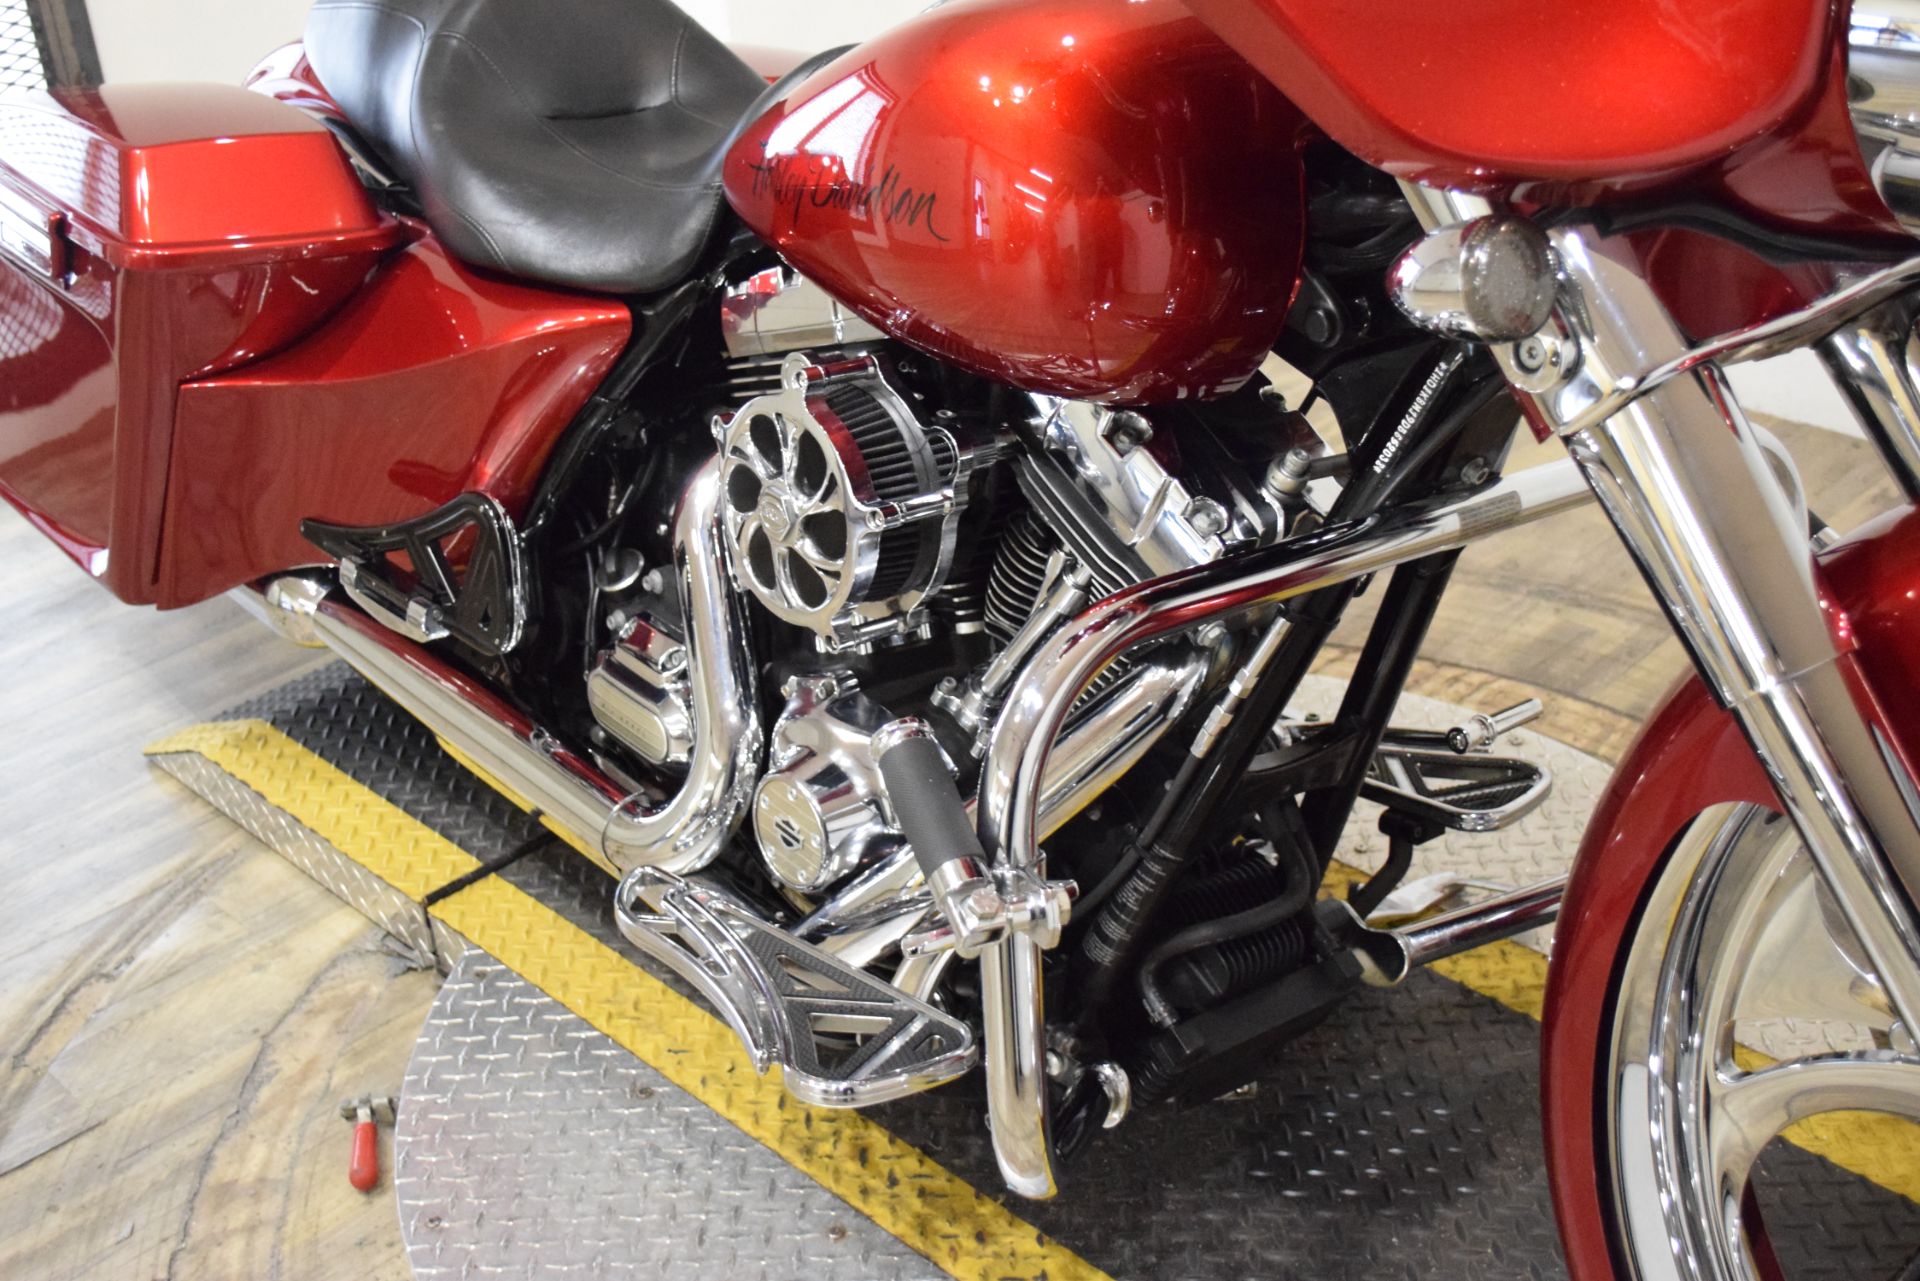 2013 Harley-Davidson Street Glide® in Wauconda, Illinois - Photo 4